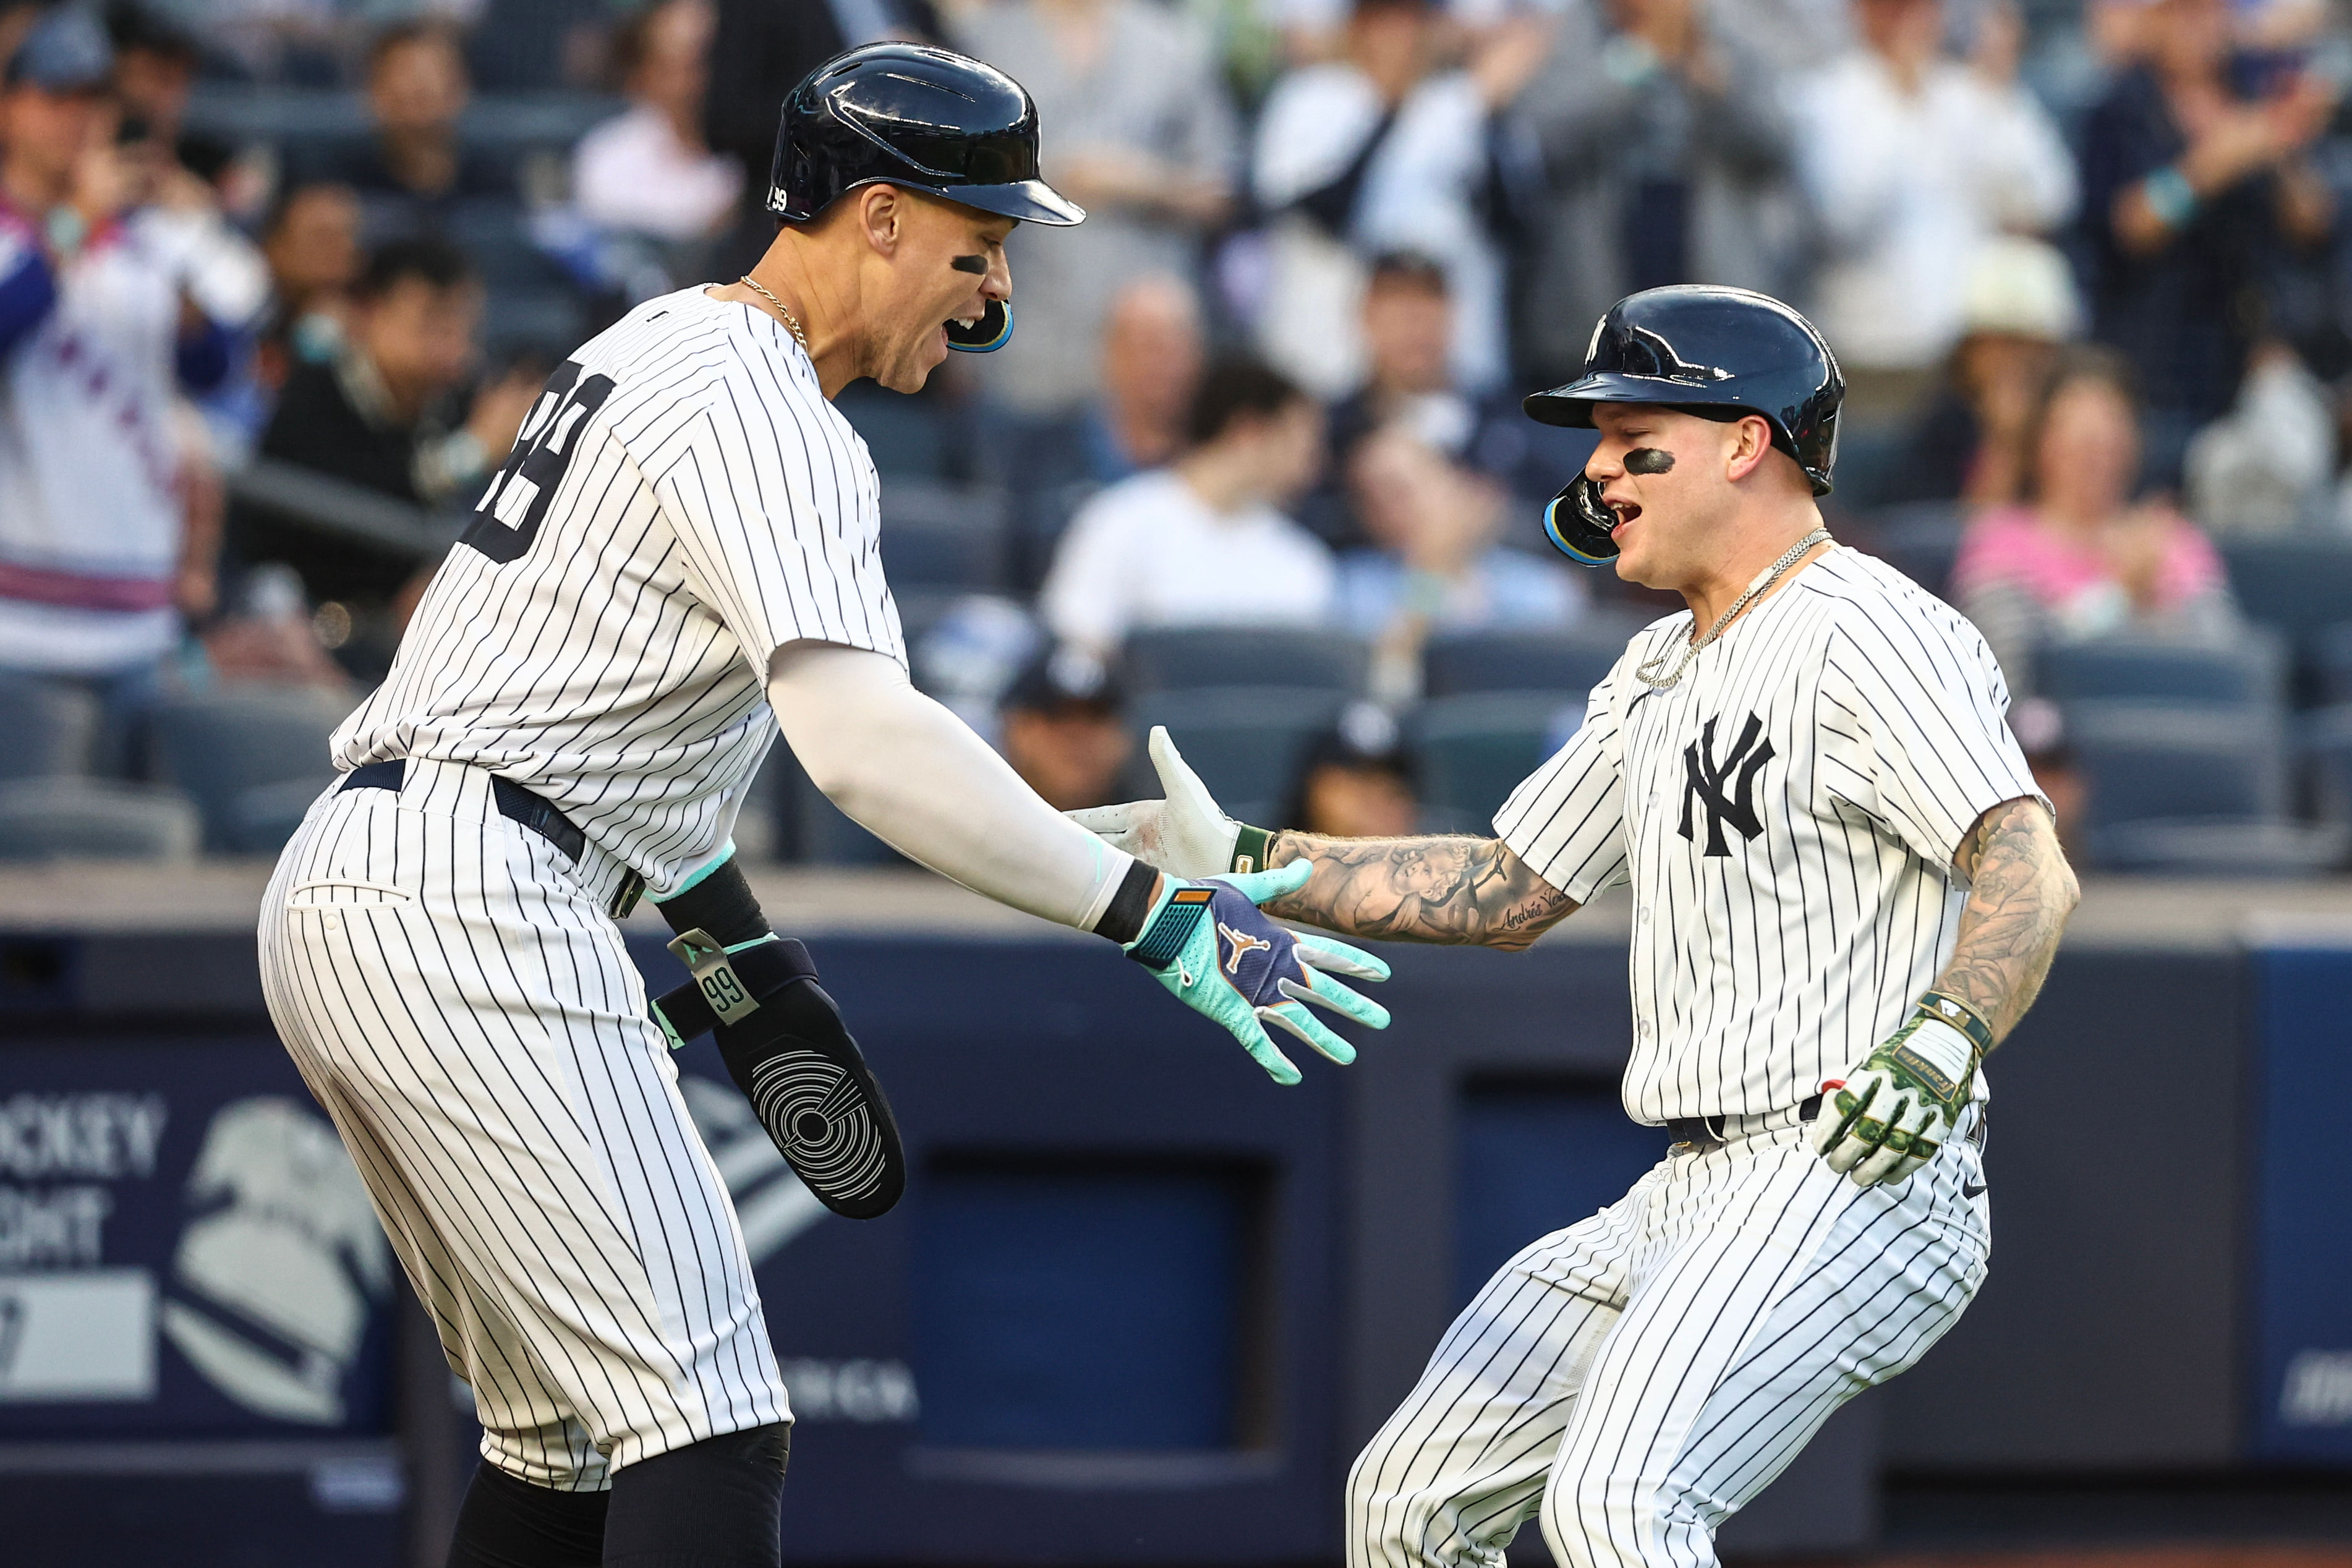 New York Yankees - Aaron Judge and Alex Verdugo (Image via USA Today)